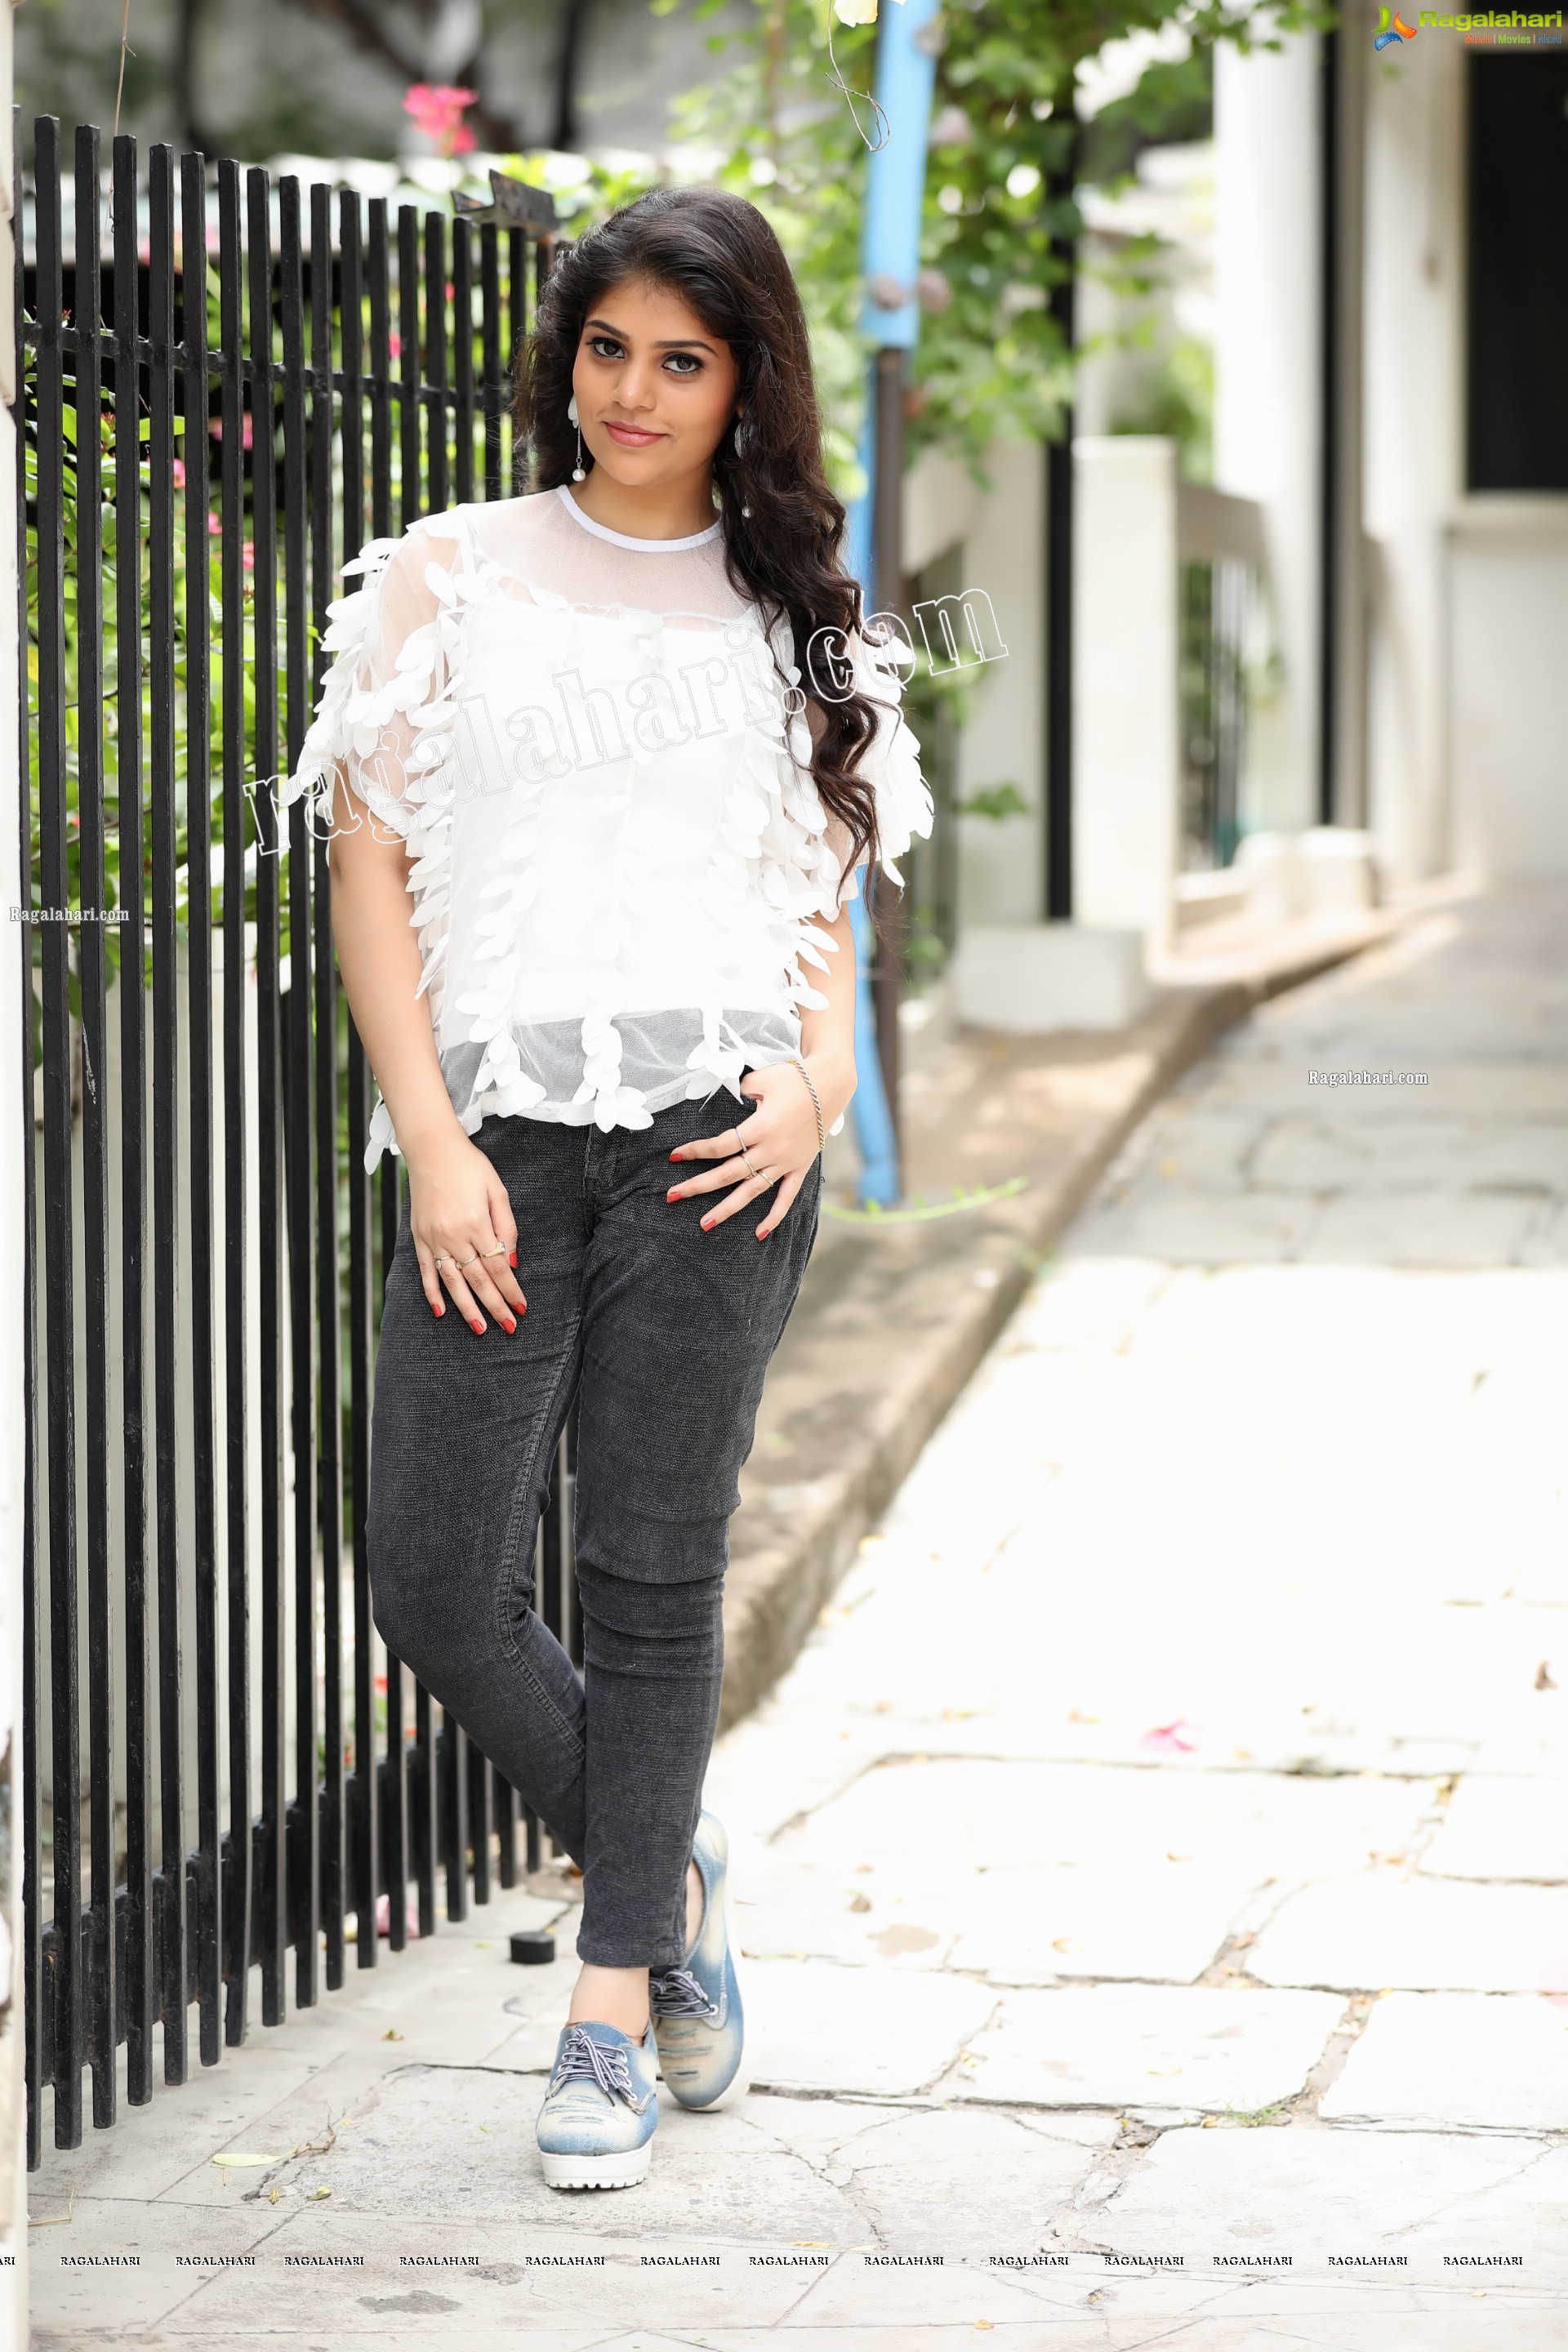 Viswa Sri Bandhavi in White Net Top and Black Jeans Exclusive Photo Shoot